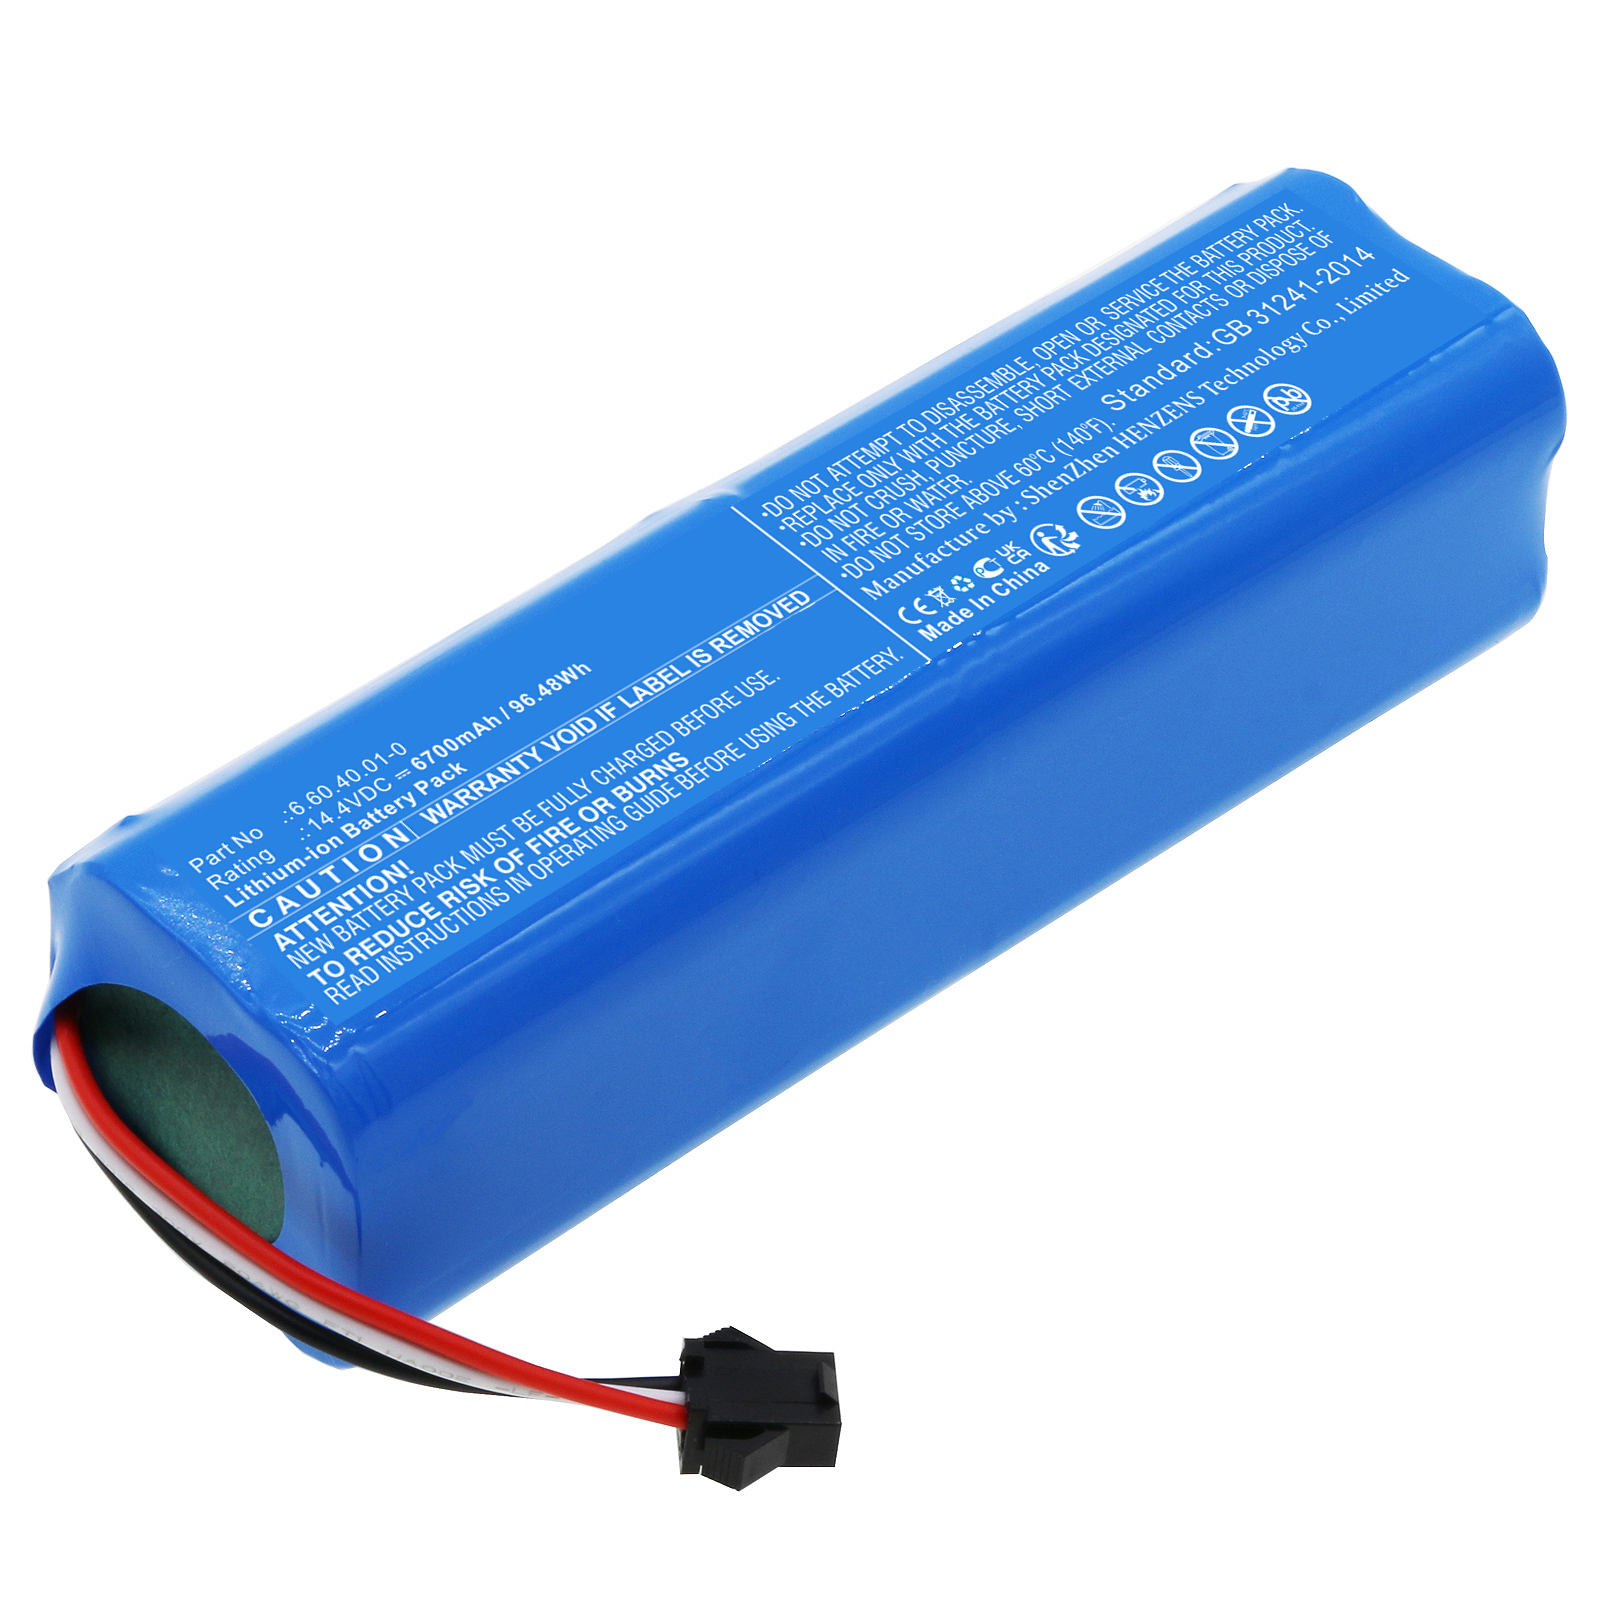 Batteries for BlaupunktVacuum Cleaner